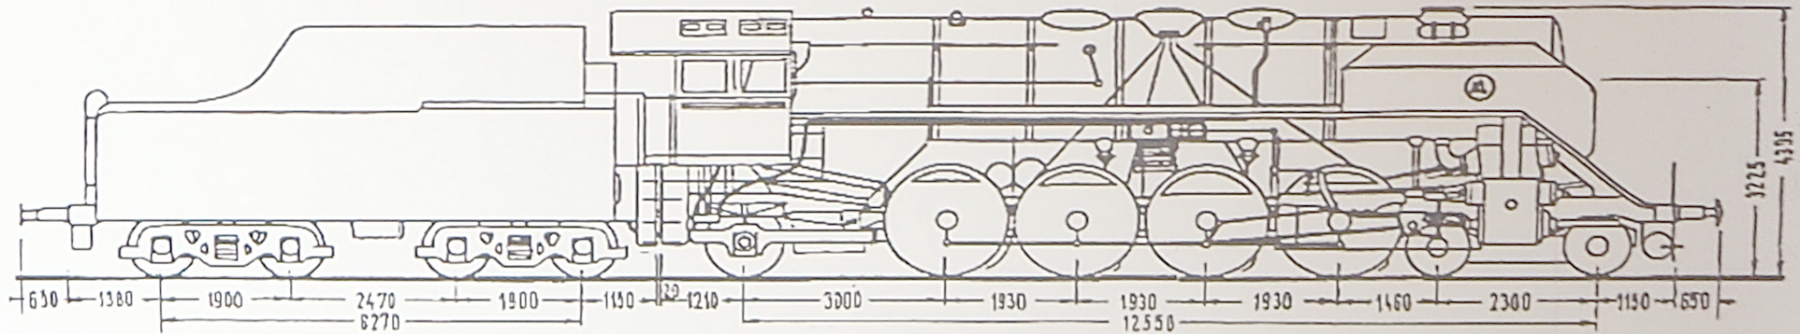 Схема паровоза 498.0